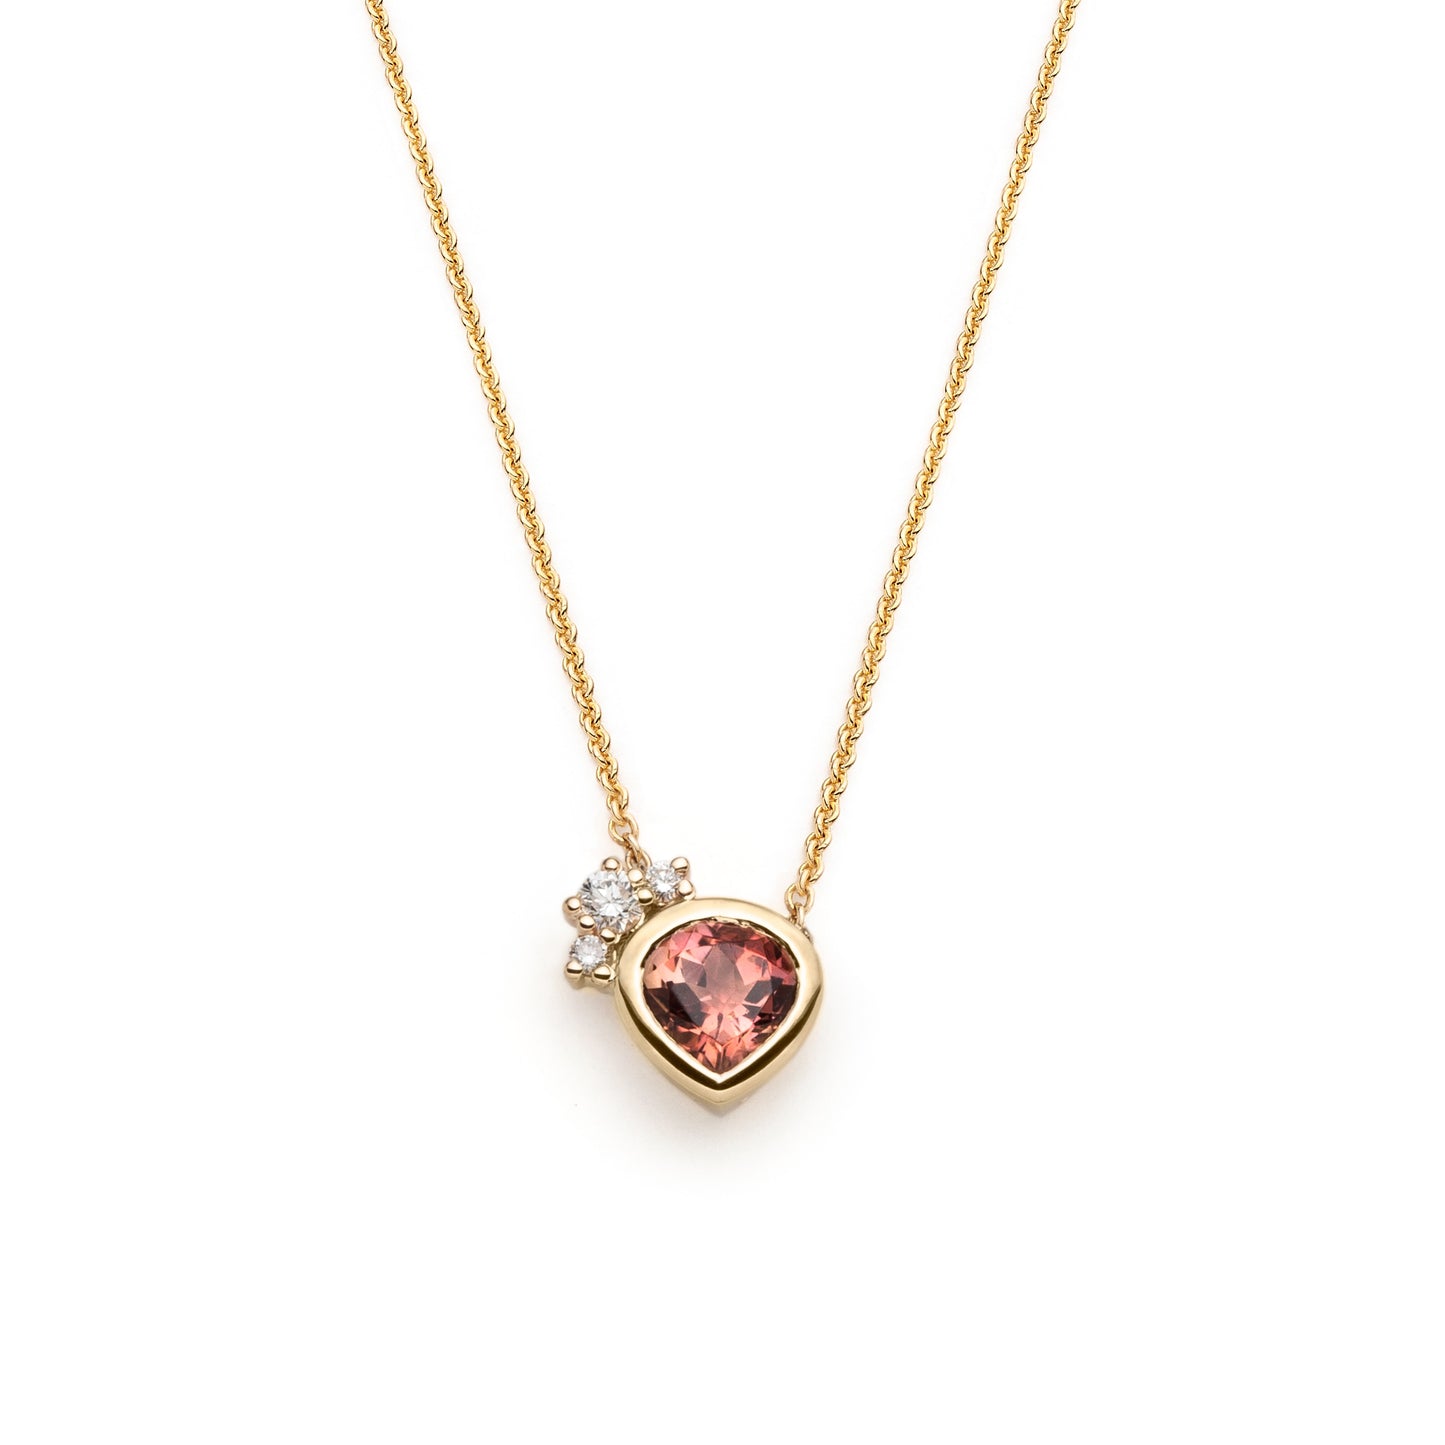 One of a kind peach tourmaline and diamonds asymmetric necklace